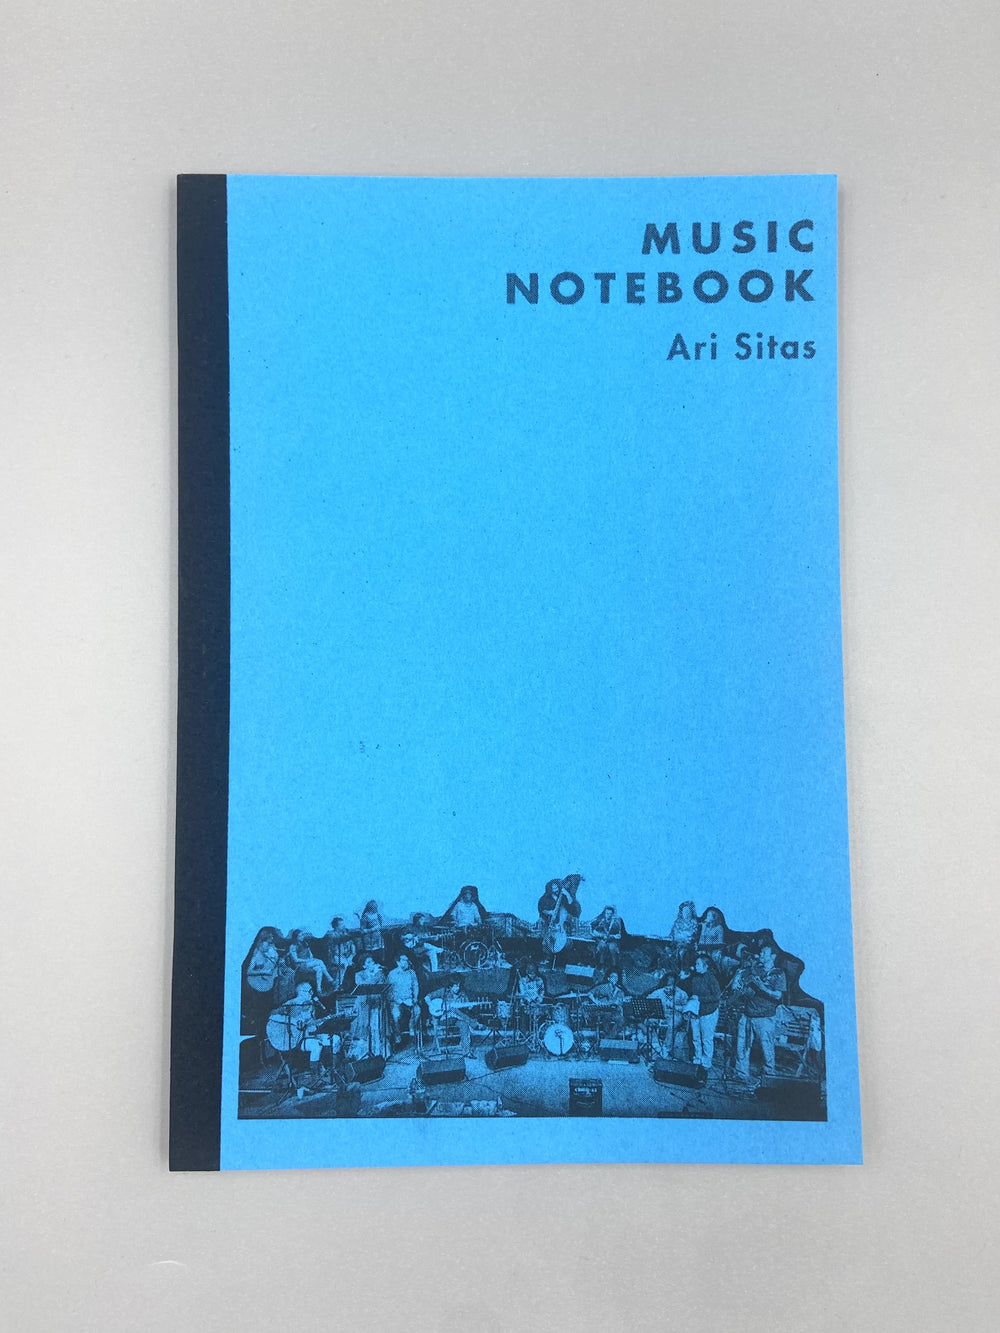 Music Notebook by Ari Sitas